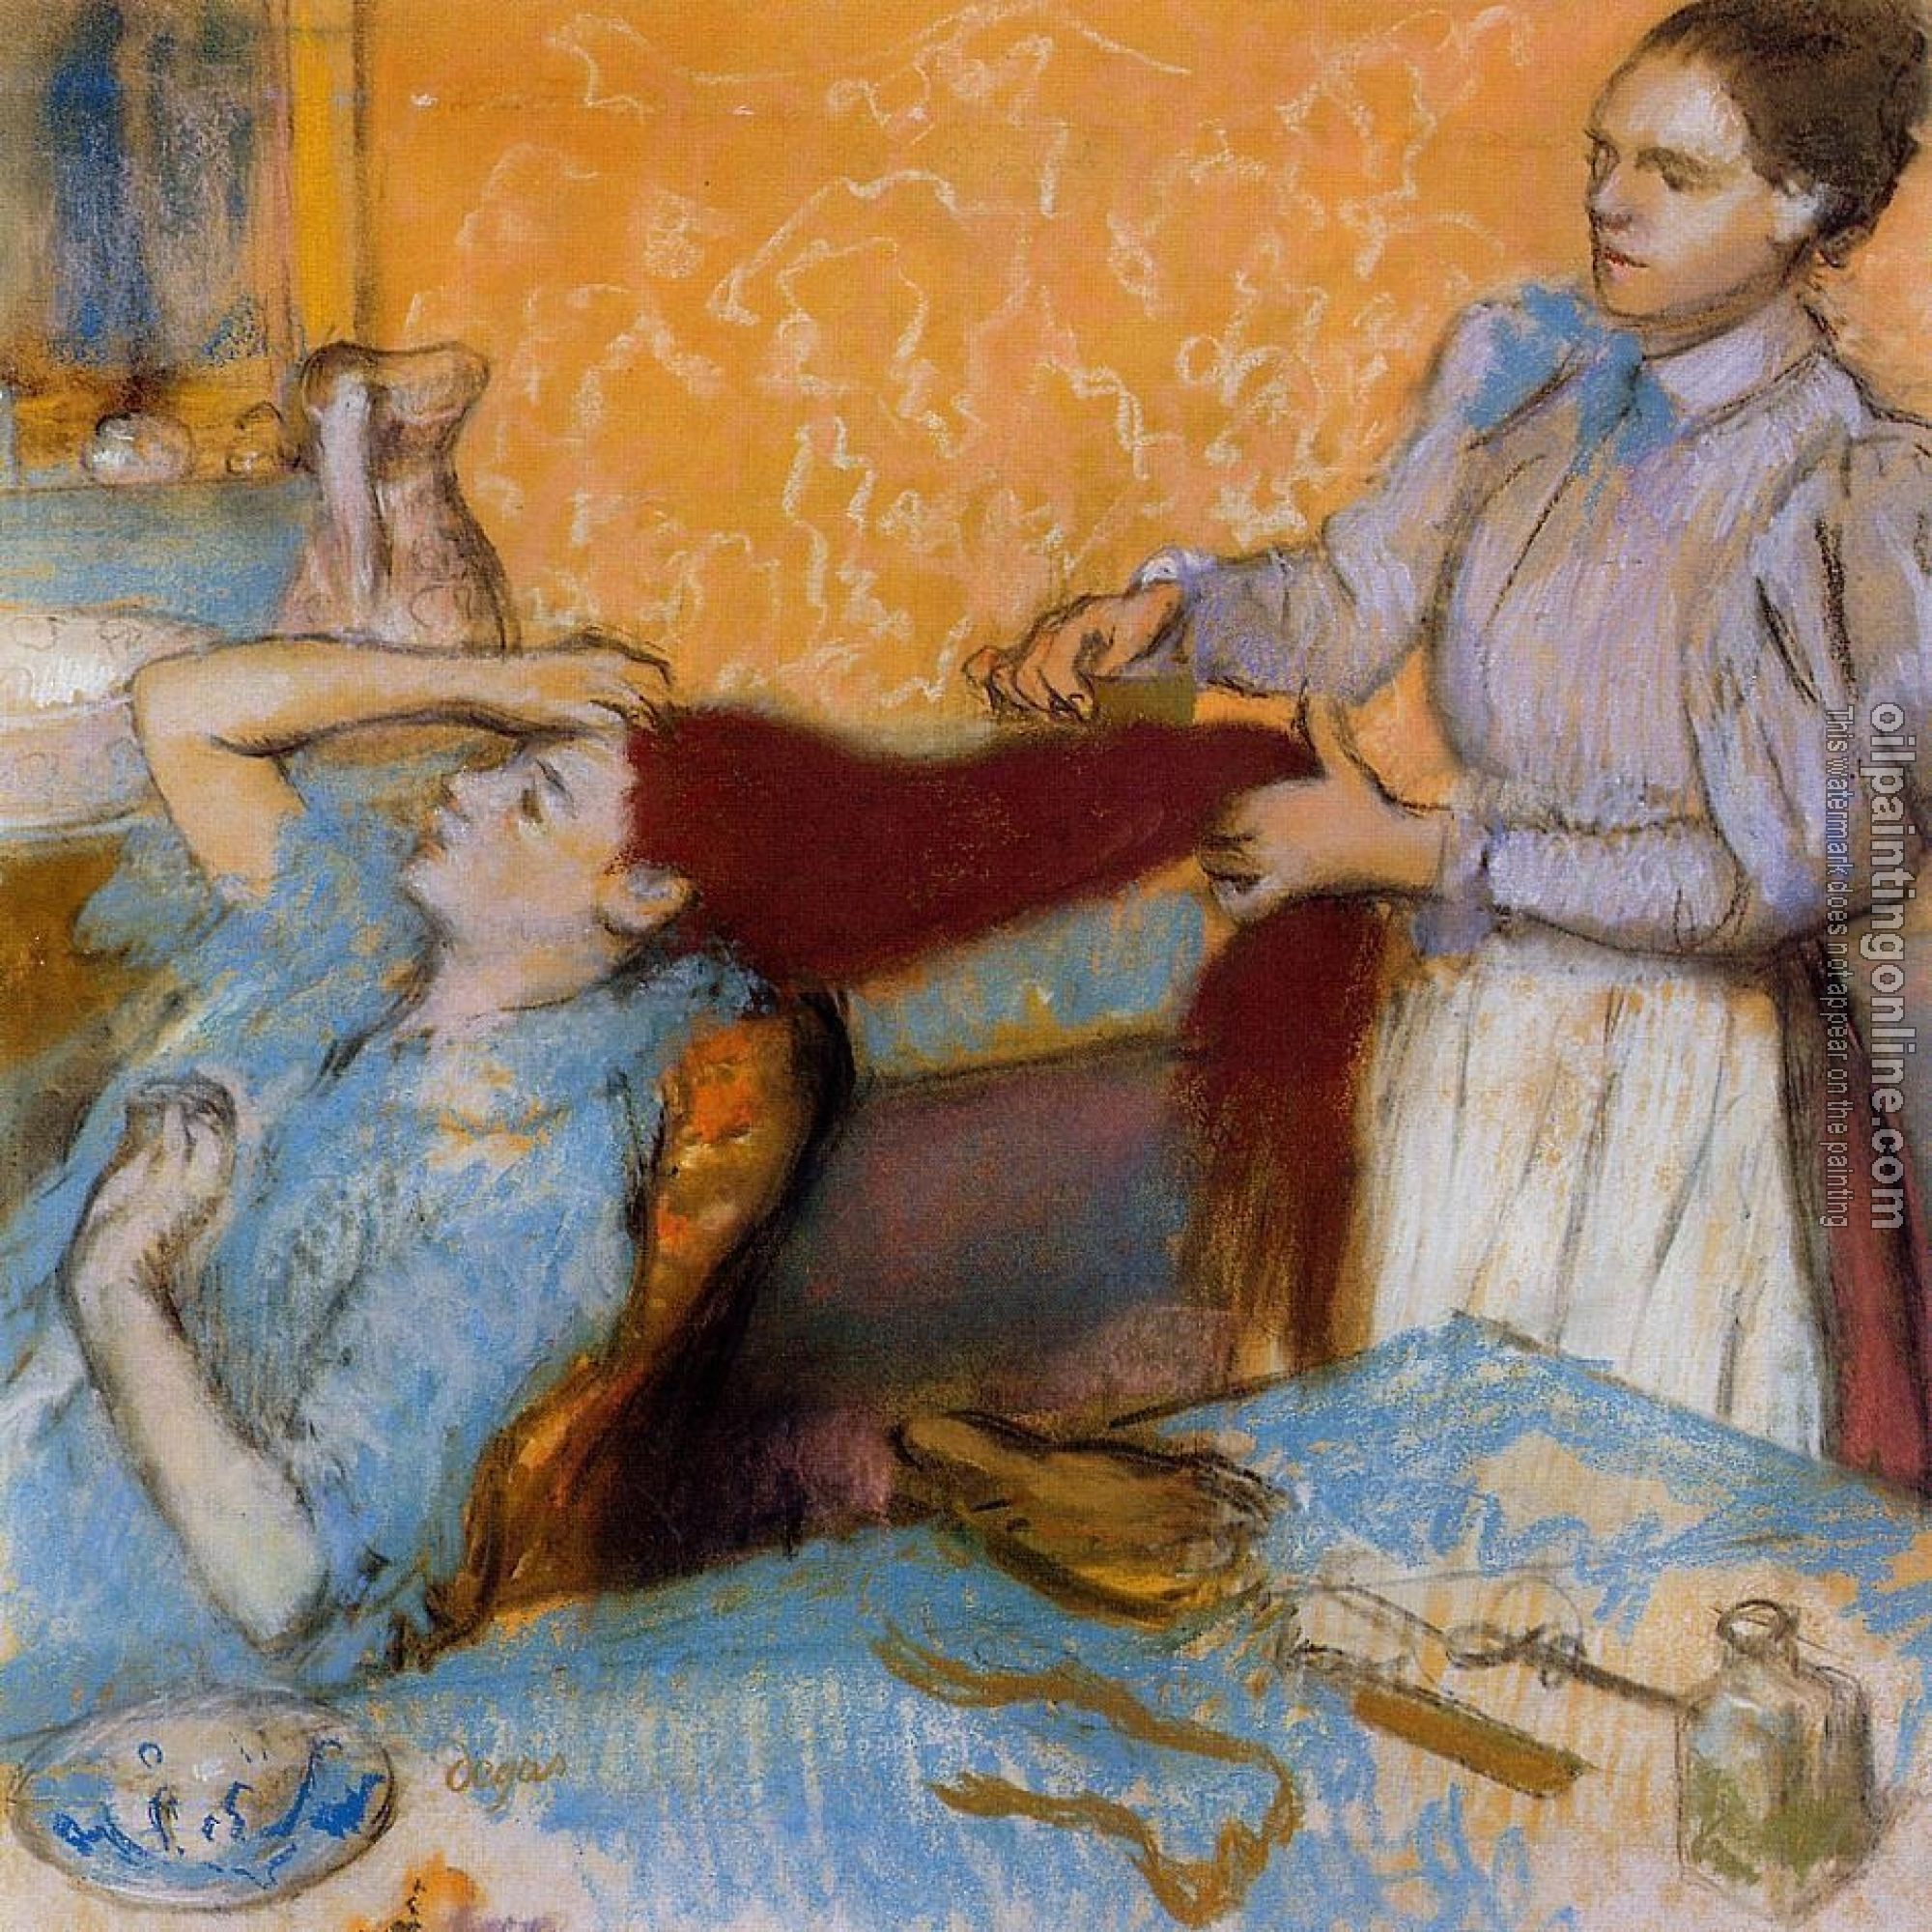 Degas, Edgar - Woman Having Her Hair Combed